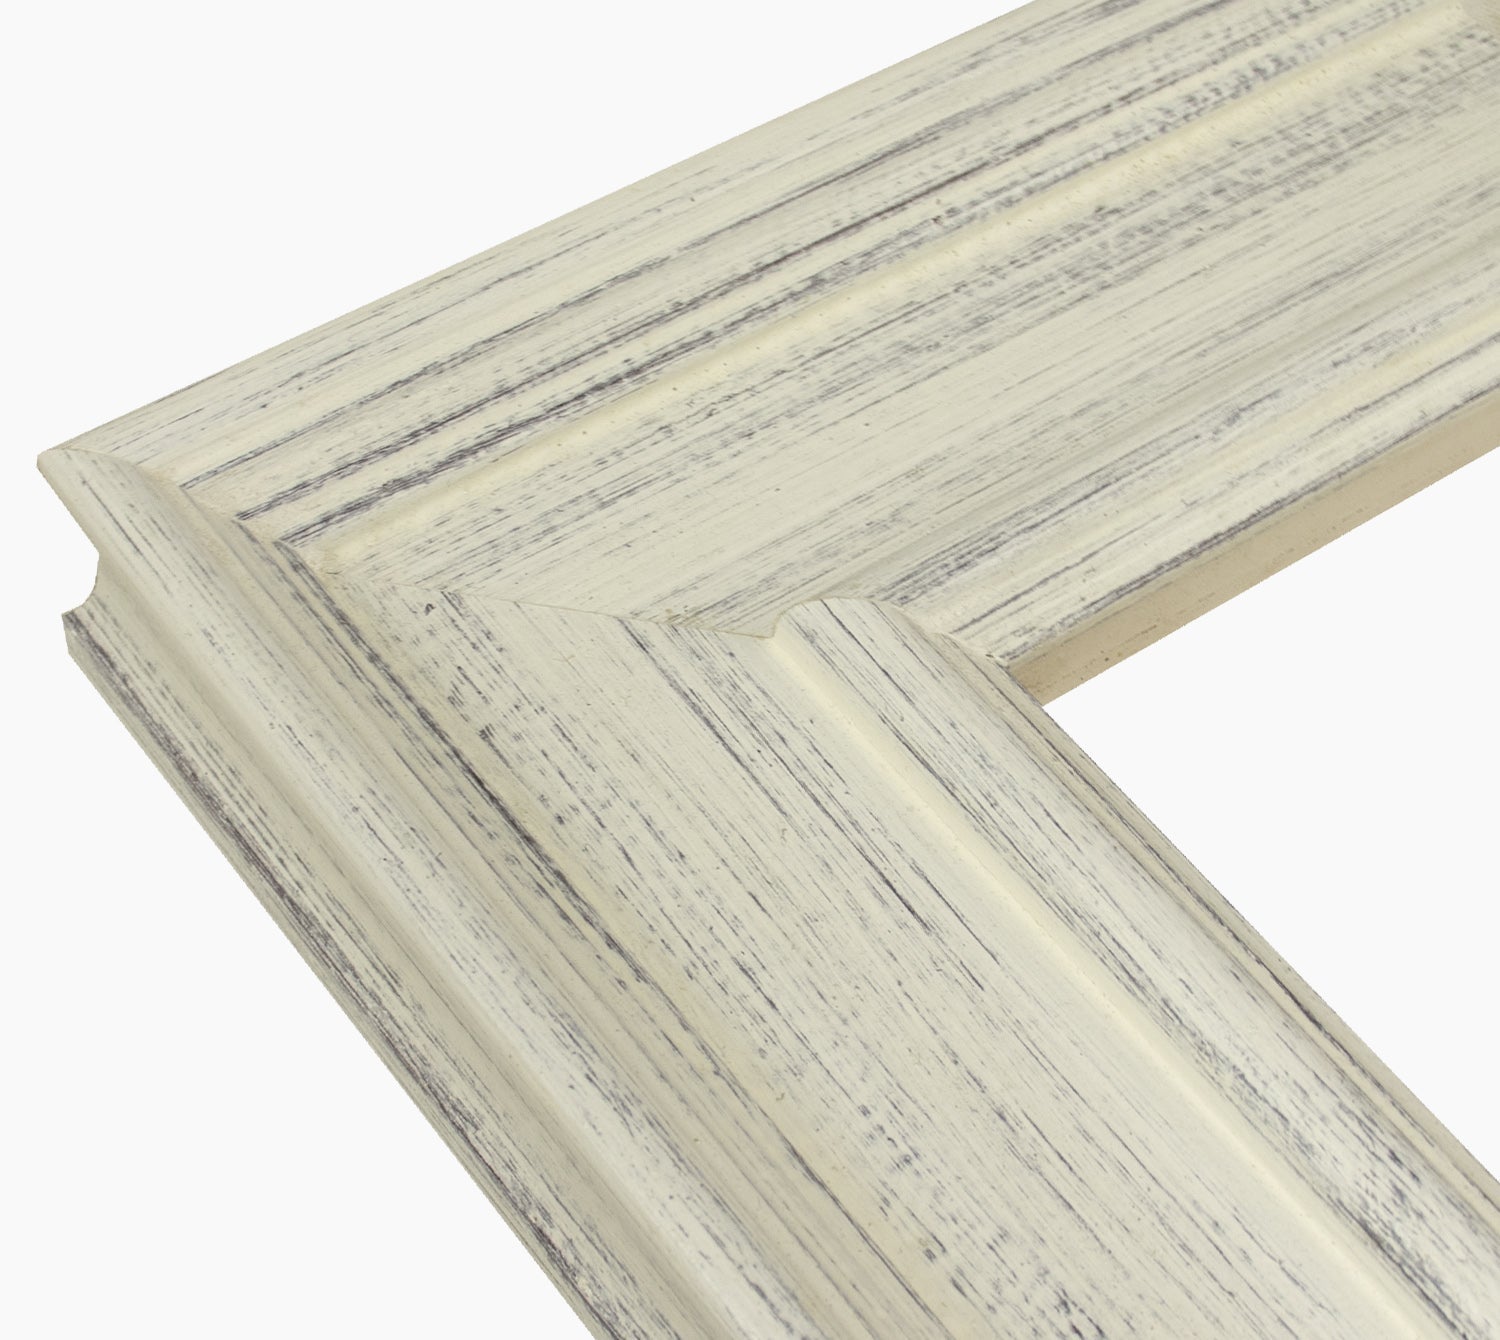 740.920 cadre en bois blanc avec fond marron mesure de profil 100x50 mm Lombarda cornici S.n.c.